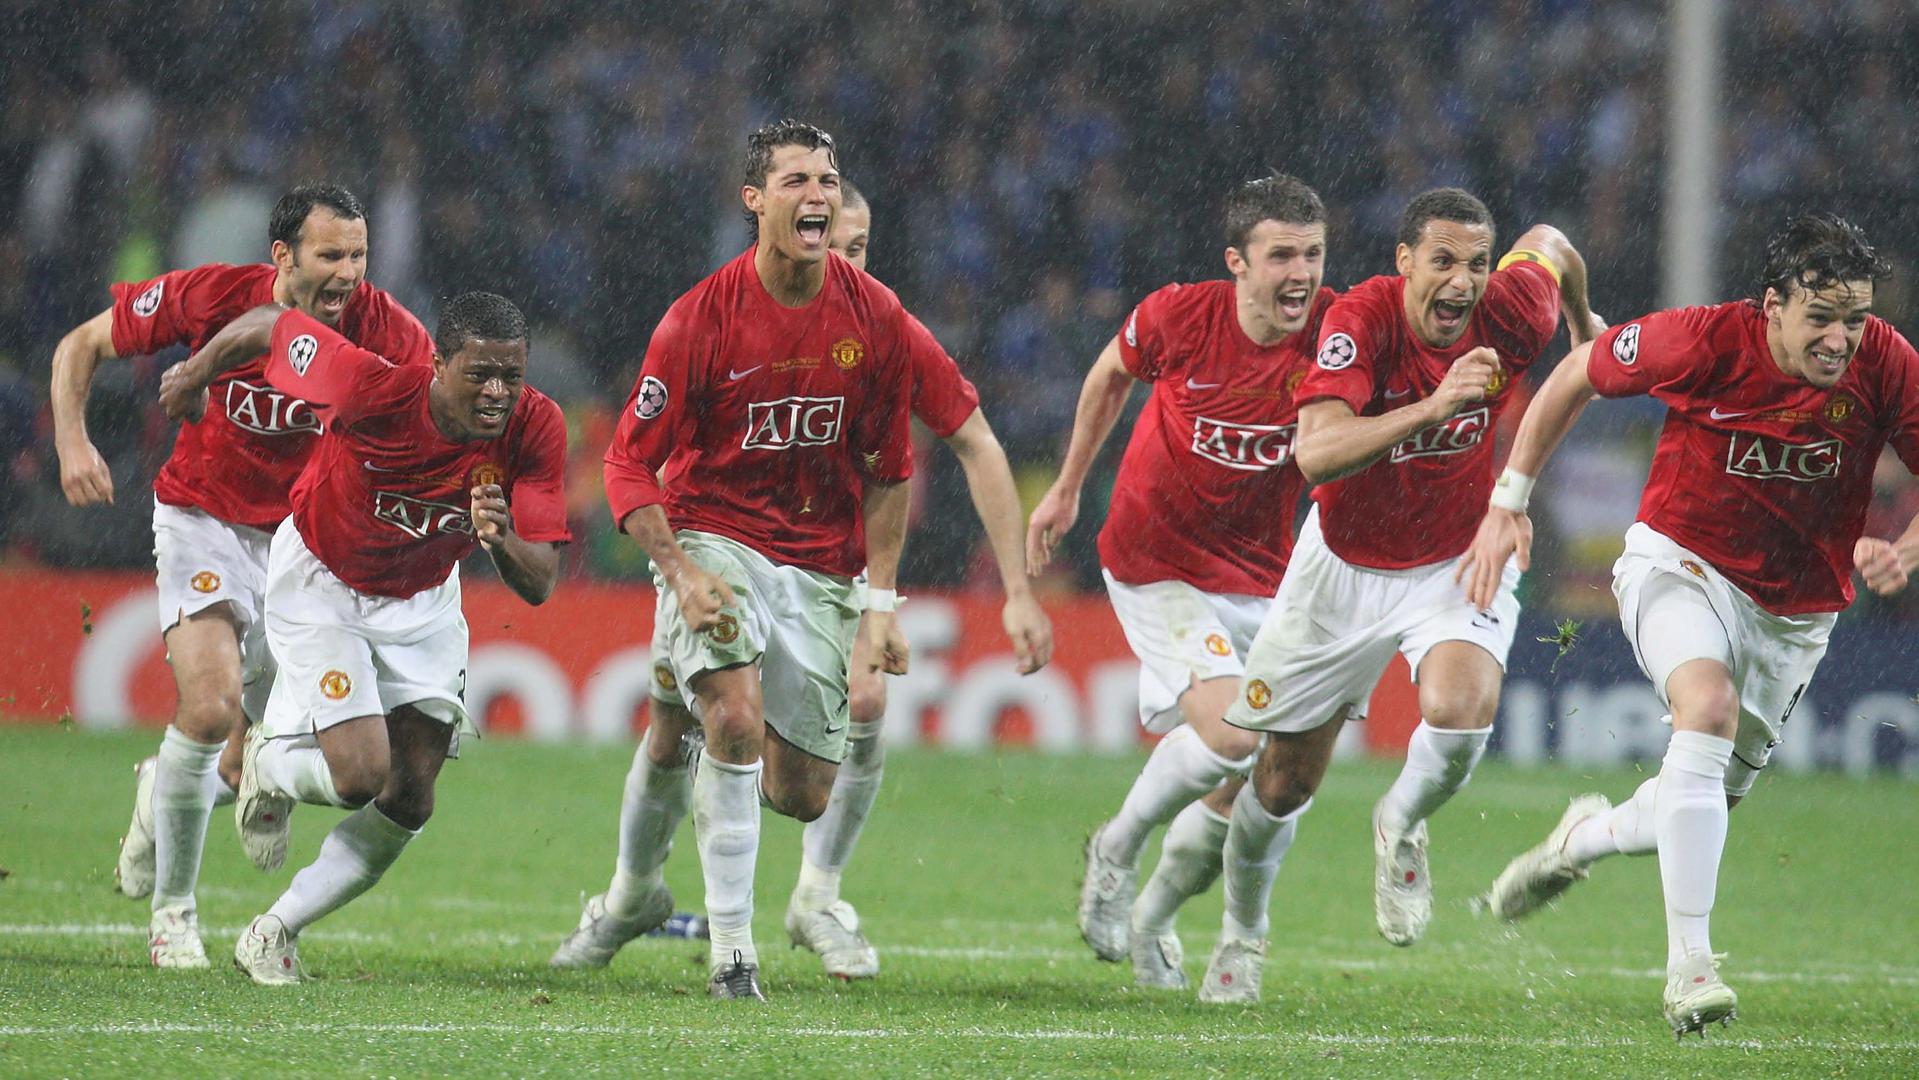 Get Manchester United 2008 Wallpaper Images